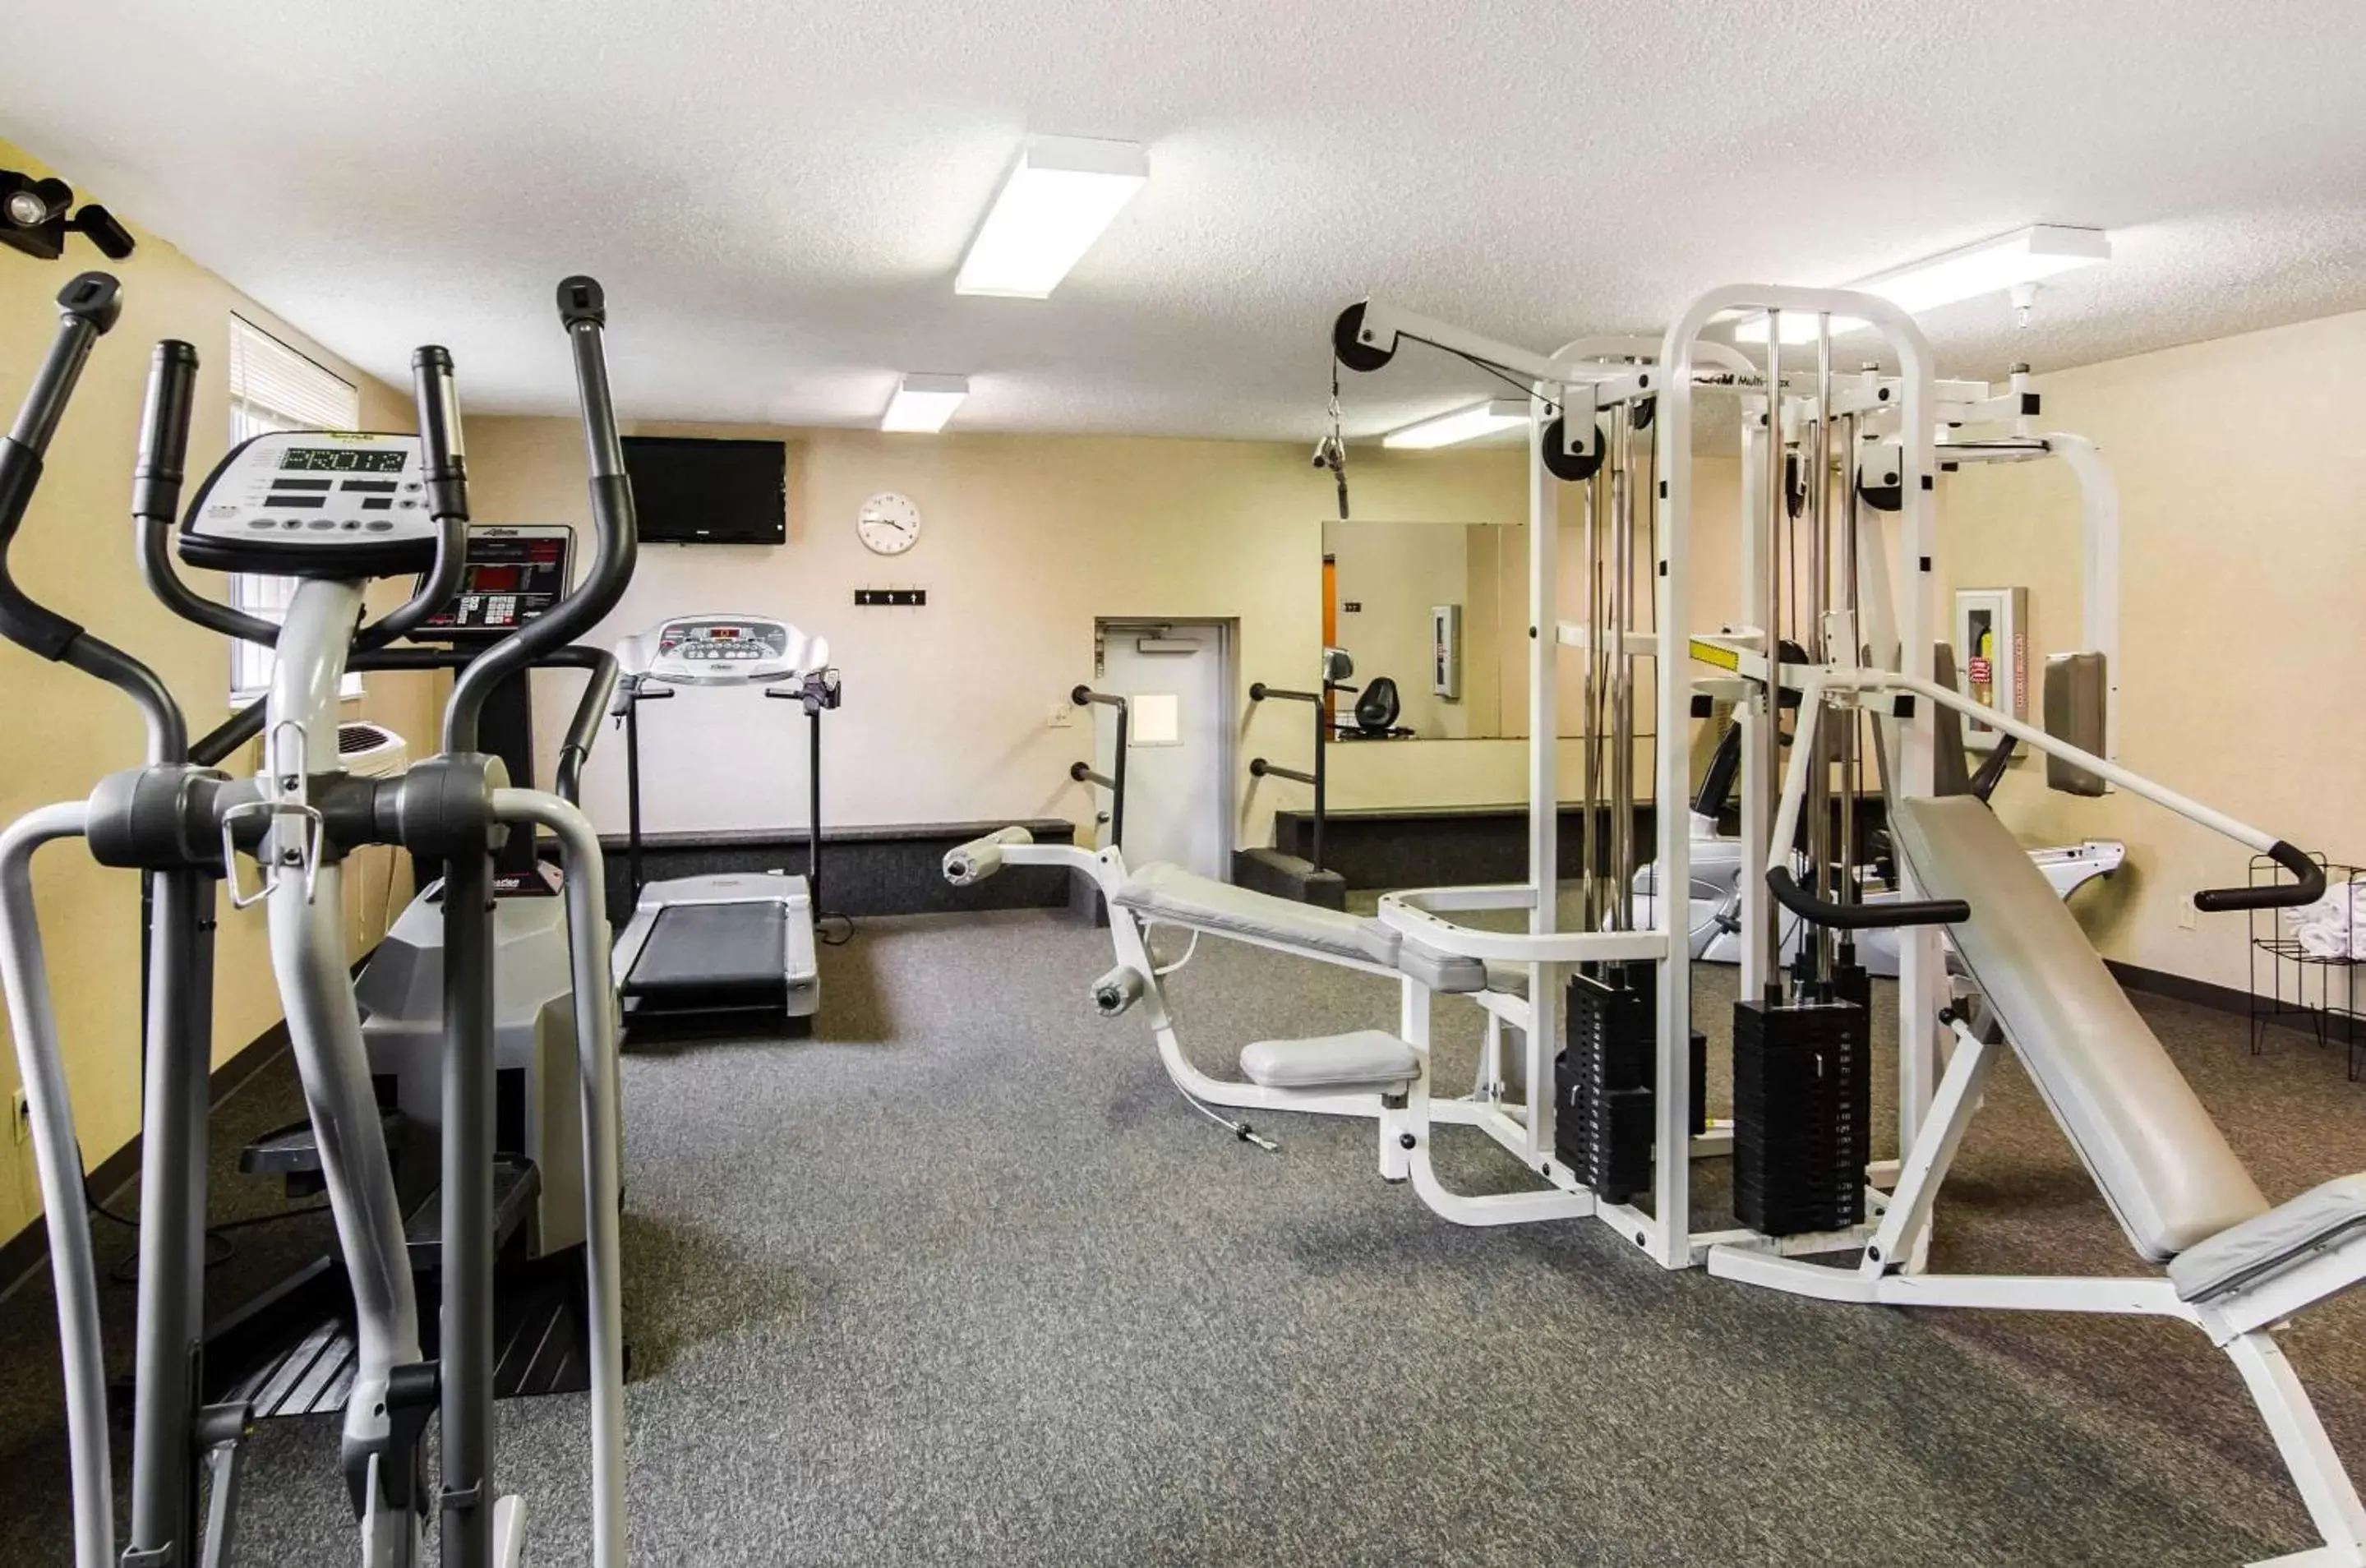 Fitness centre/facilities, Fitness Center/Facilities in Quality Inn Summersville